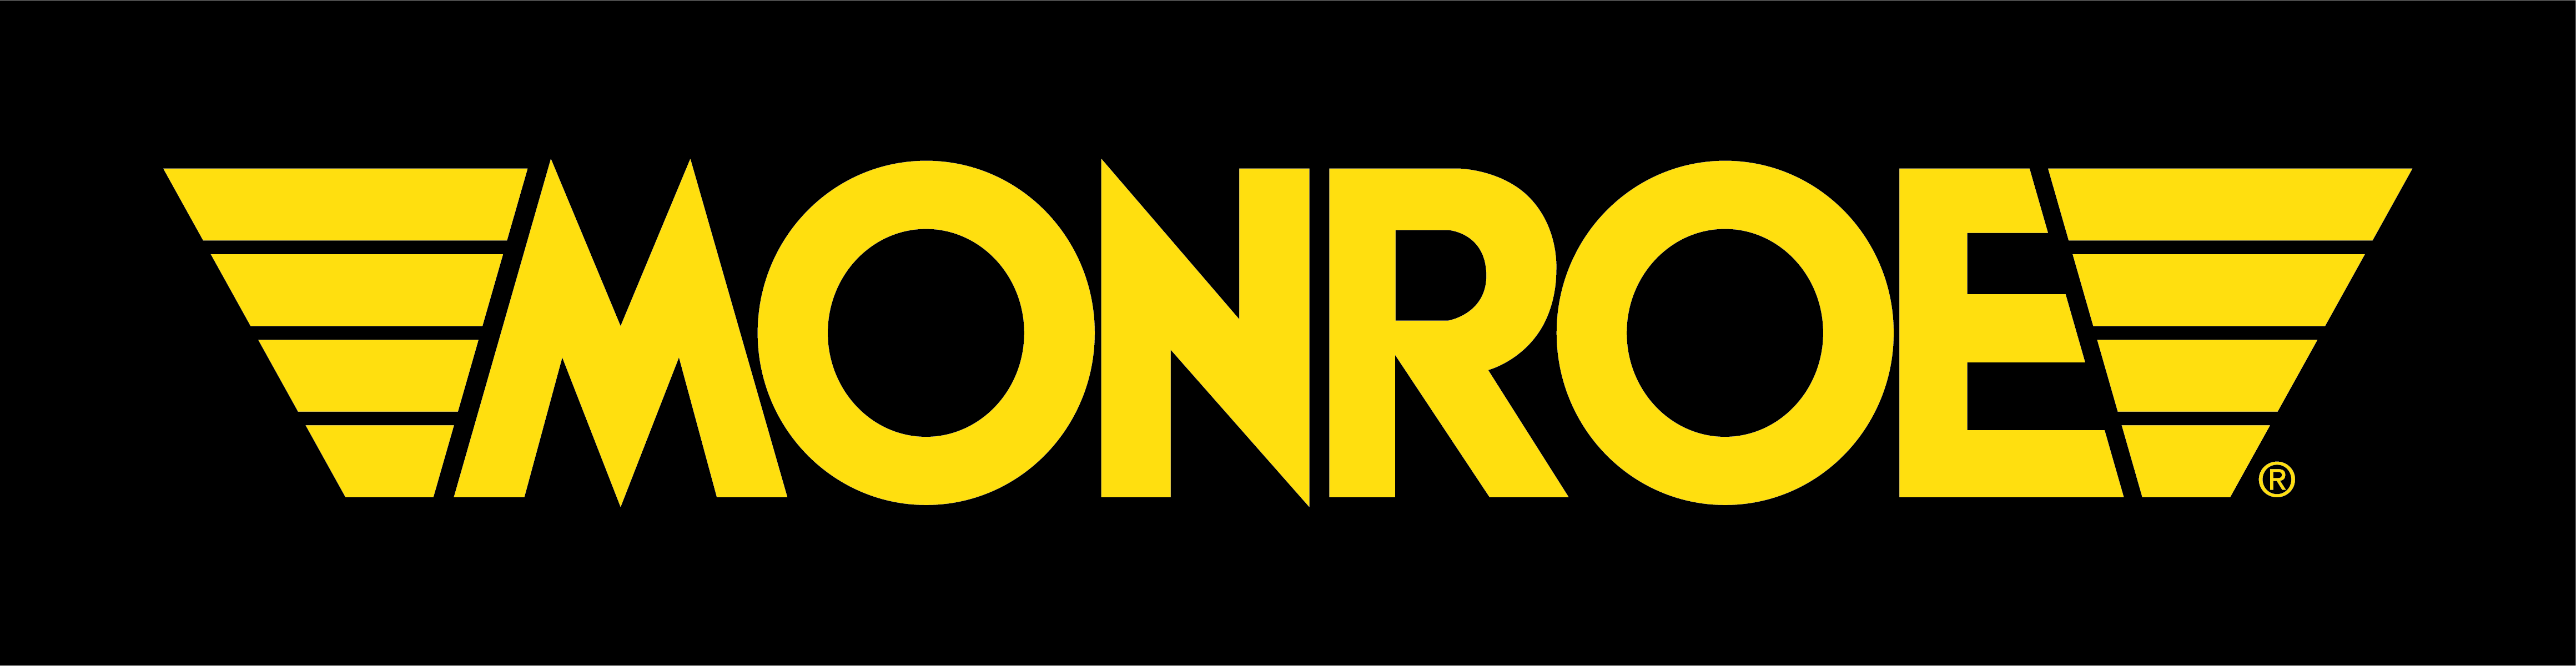 Monroe_MNBRD2322_Logo_Brand_brand-logo-yellow-blackBG-LV-CV